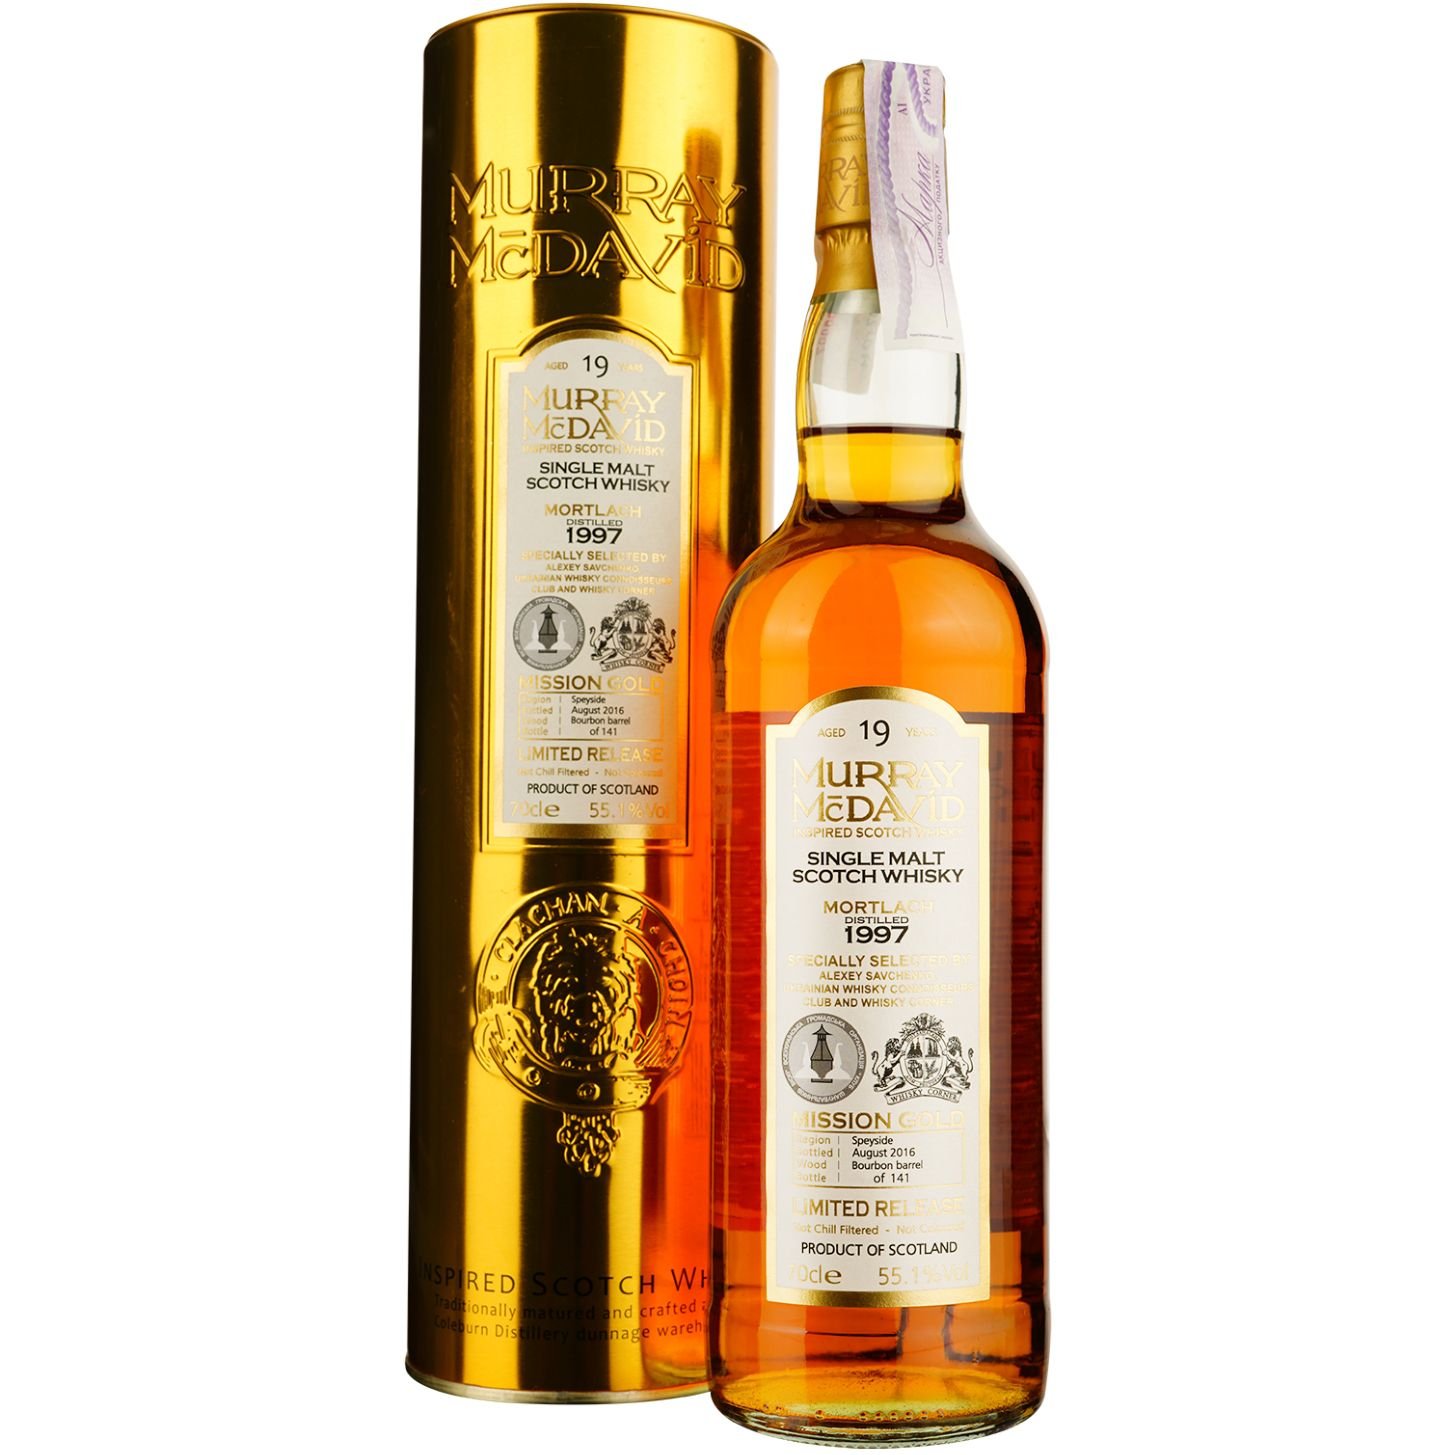 Виски Mortlach Murray McDavid 19 Years Old Single Malt Scotch Whisky, в подарочной упаковке, 55,1%, 0,7 л - фото 1